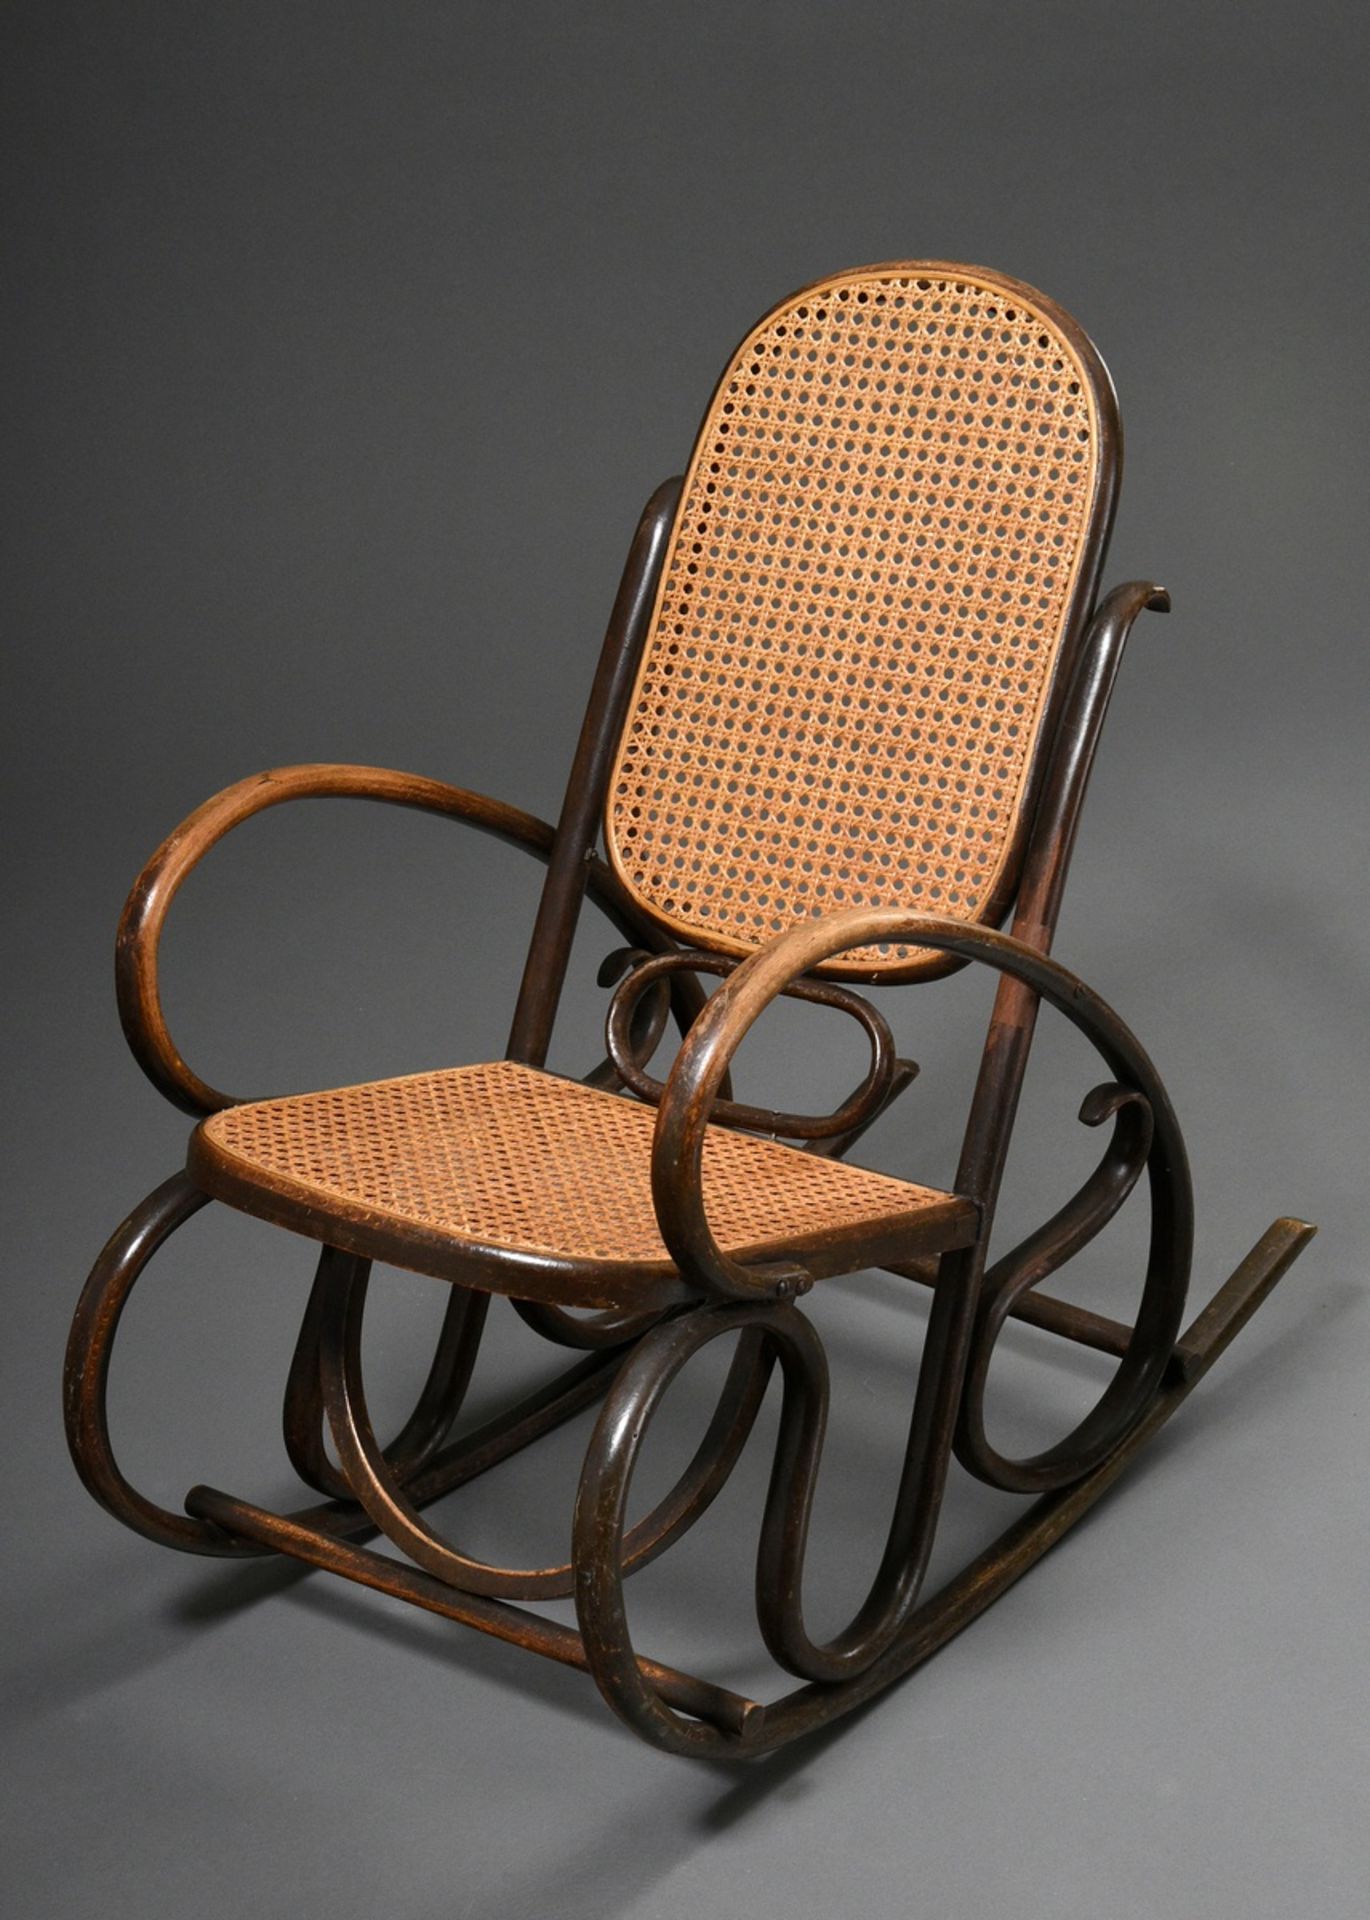 Art nouveau children's rocking chair in Thonet style, dark stained bentwood with wickerwork, h. 71,